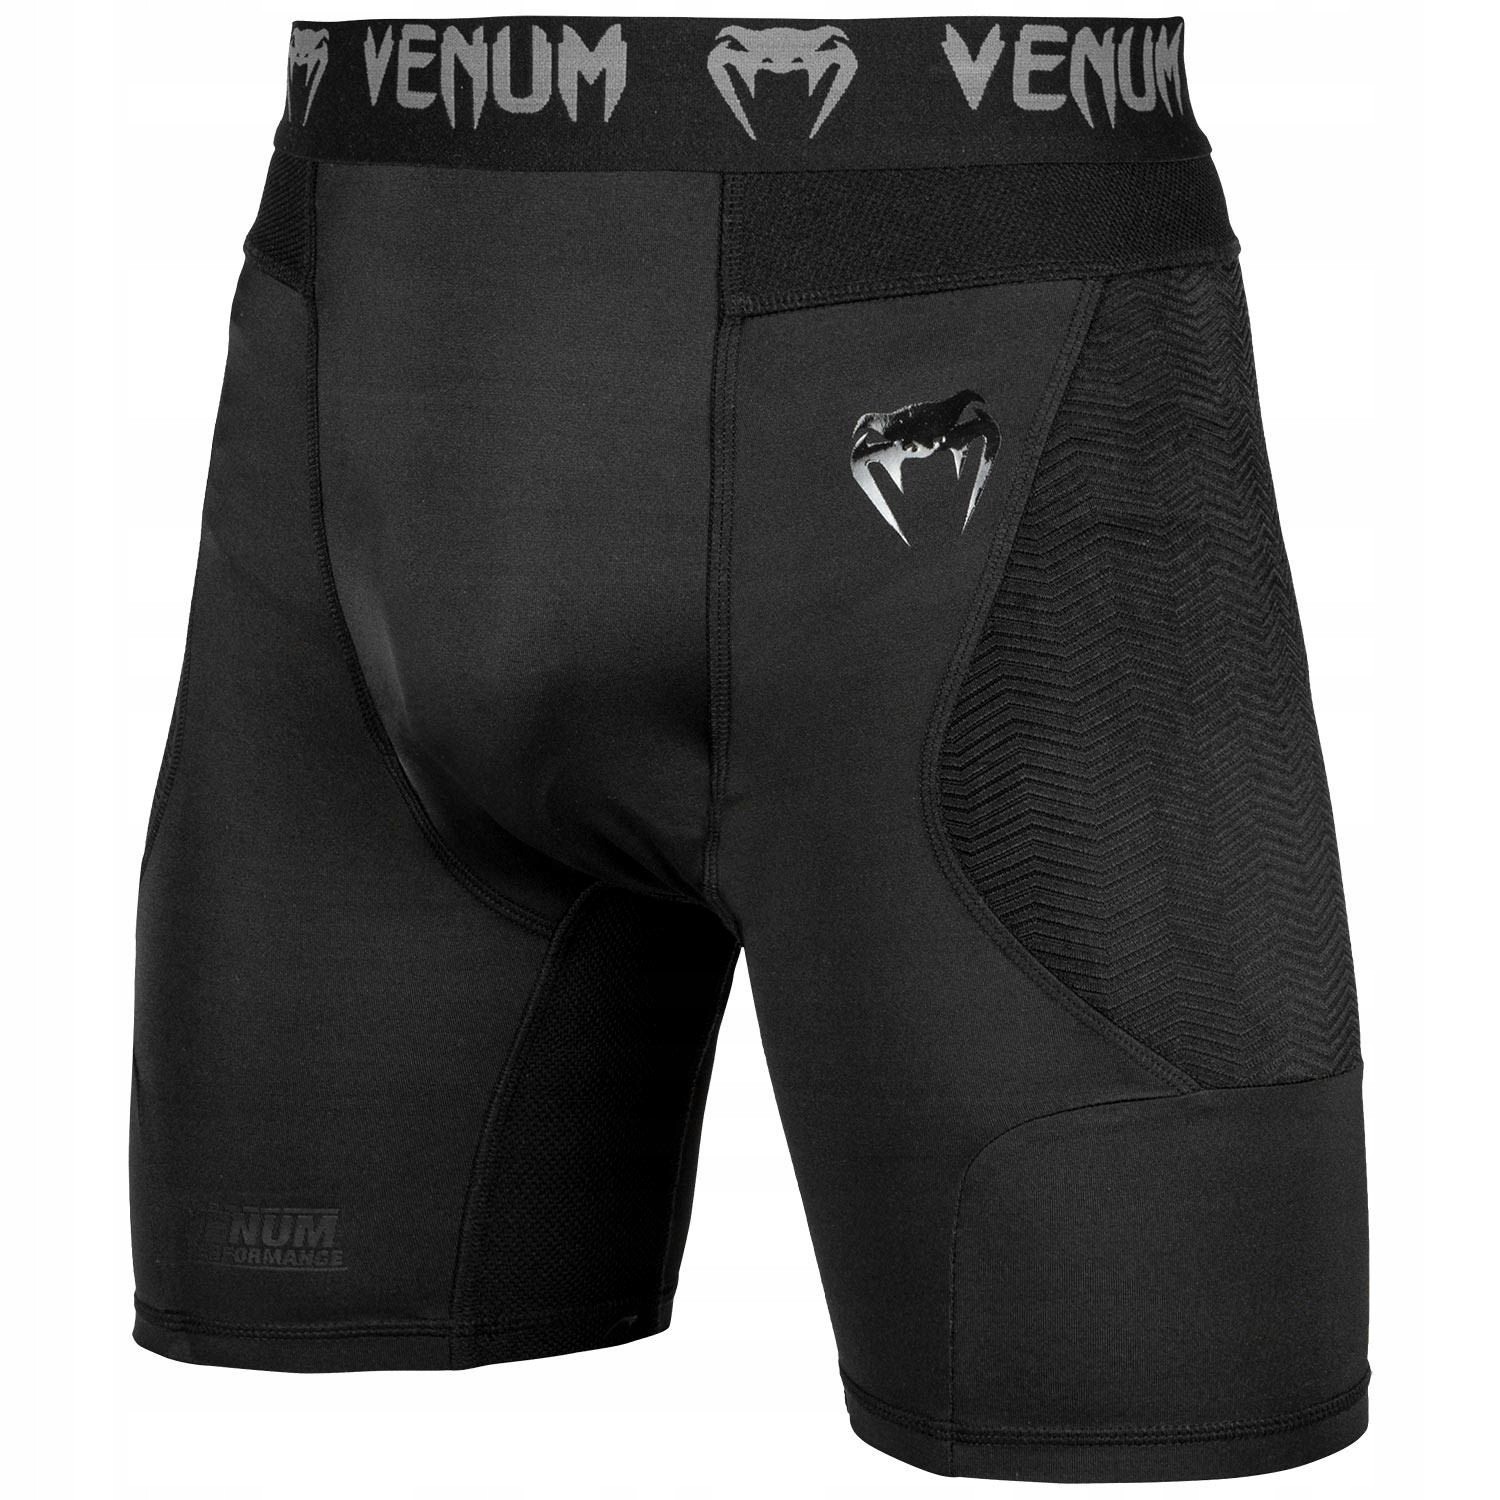 Venum шорты g-Fit. Компрессионные шорты Venum. Шорты Venum g-Fit Black 02395, s. Venum g-Fit Black шорты мужские.